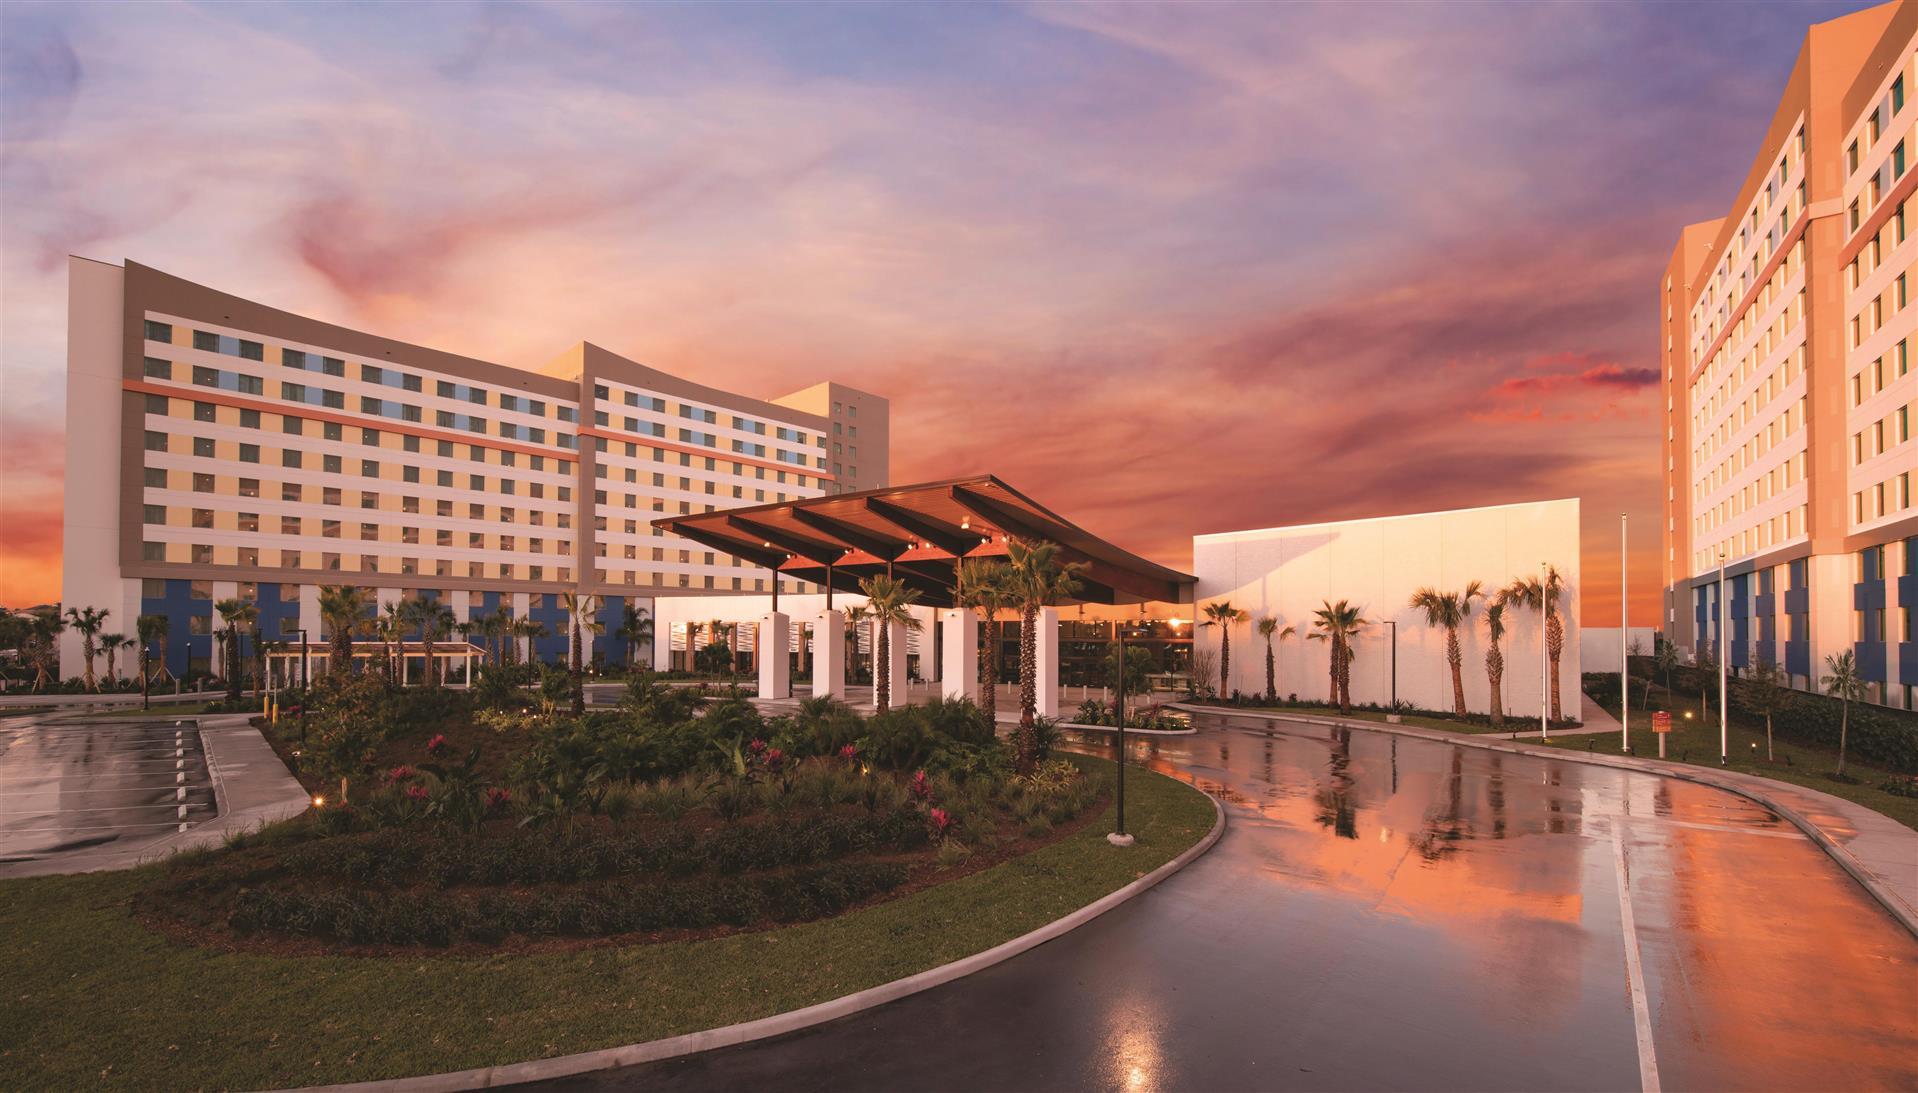 Universal's Endless Summer Resort – Dockside Inn and Suites in Orlando, FL